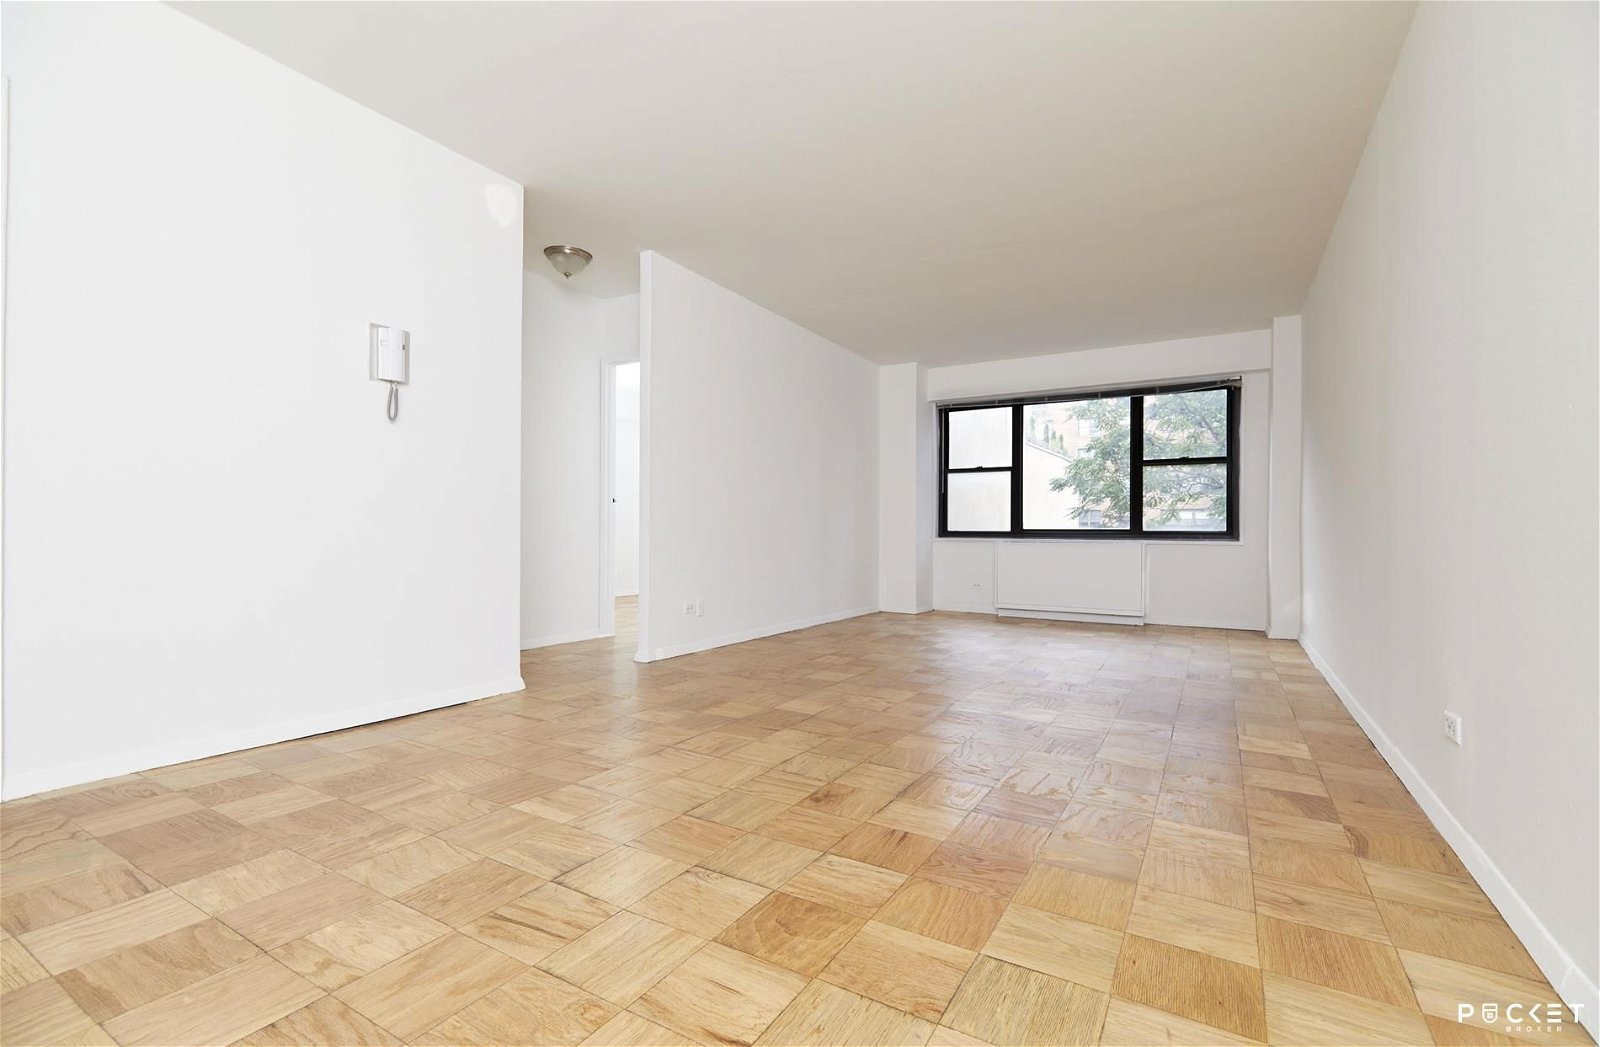 Real estate property located at 345 80th #5-K, NewYork, New York City, NY